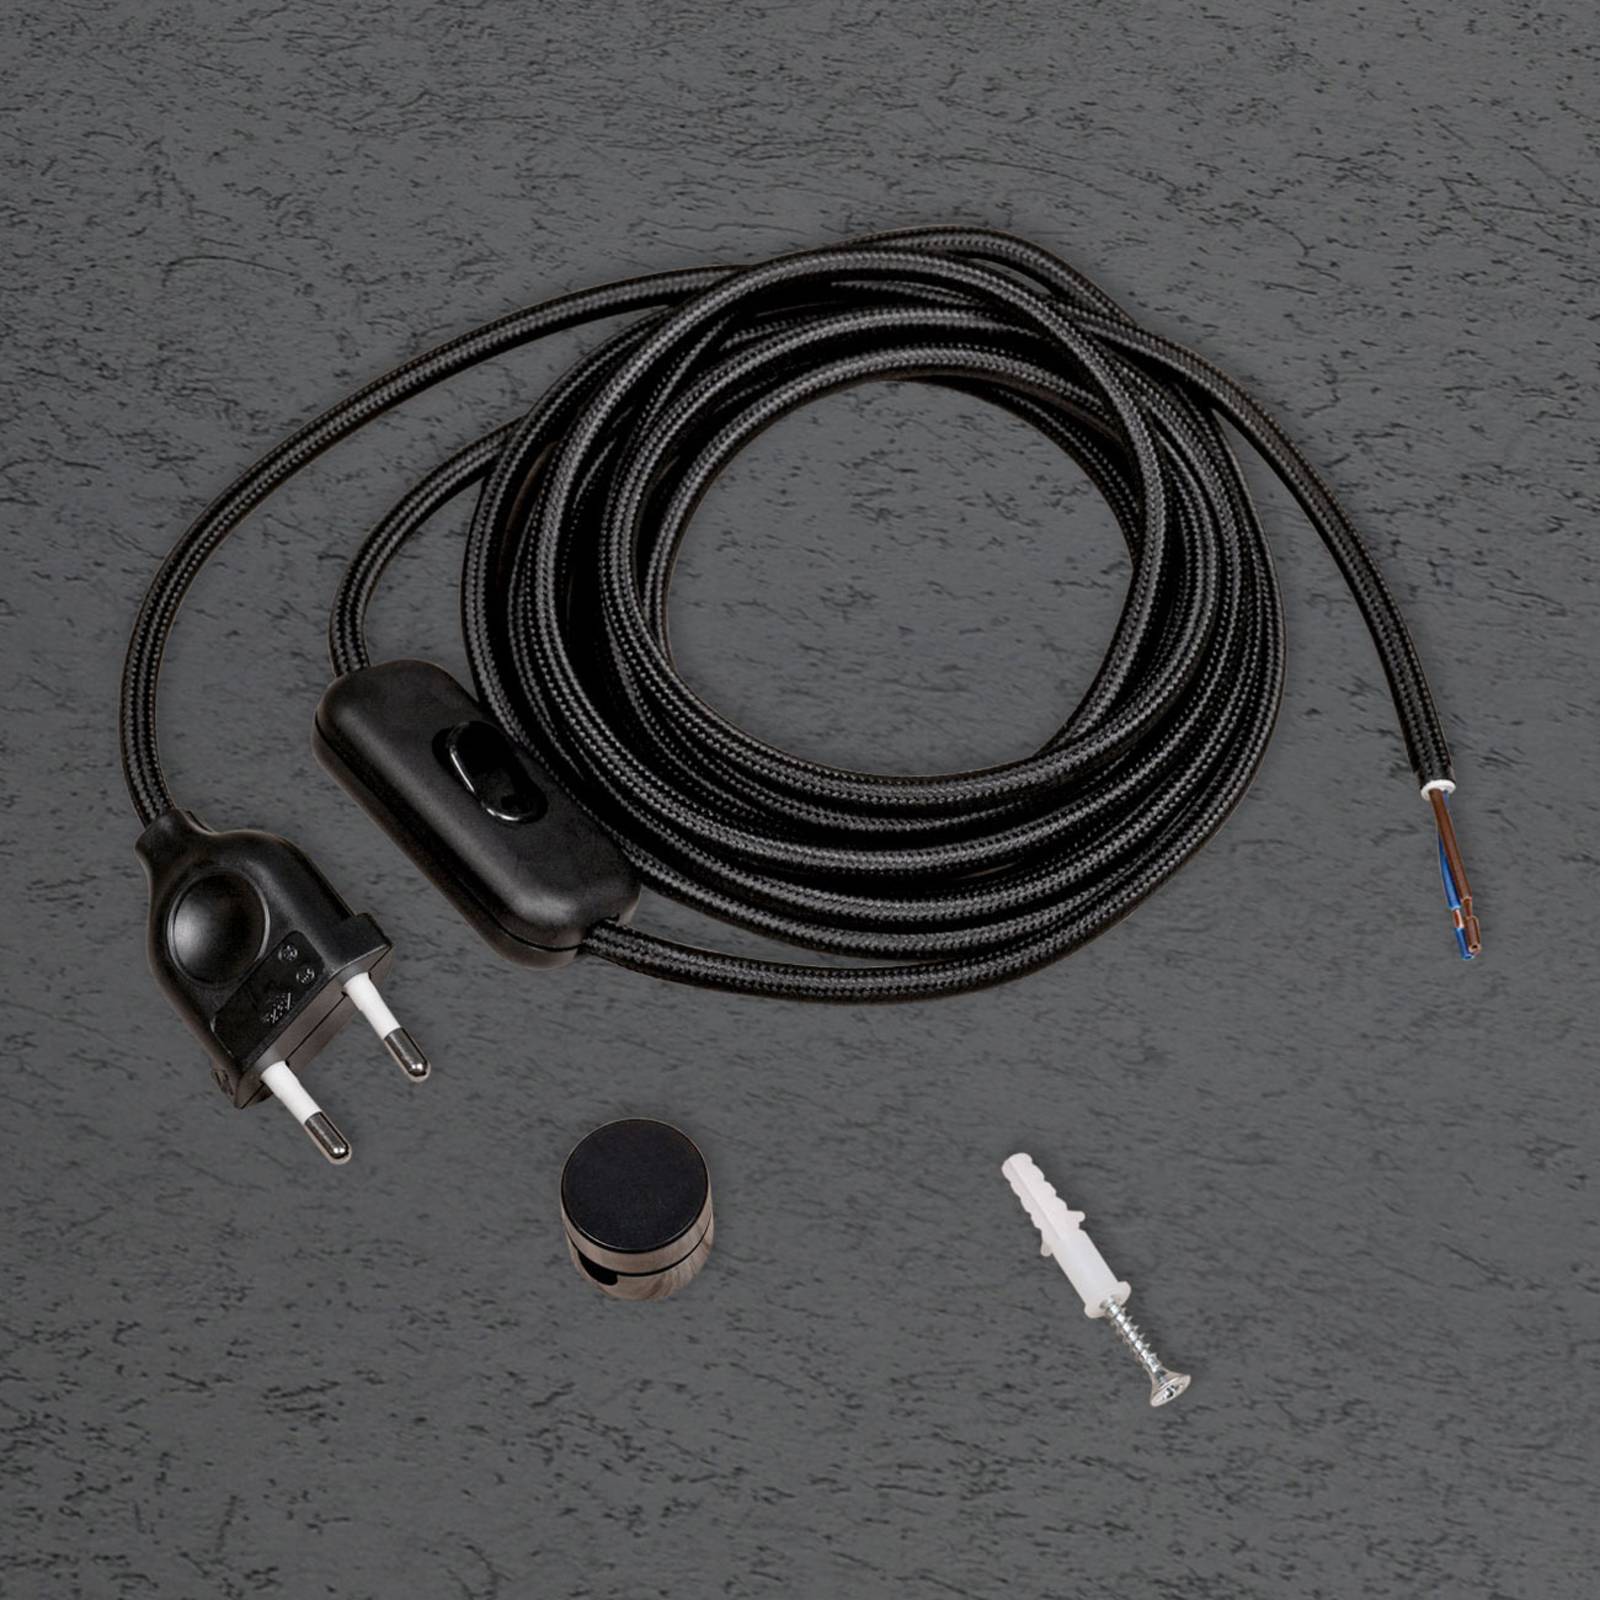 Escale Plug and Play Kabel, schwarz von Escale